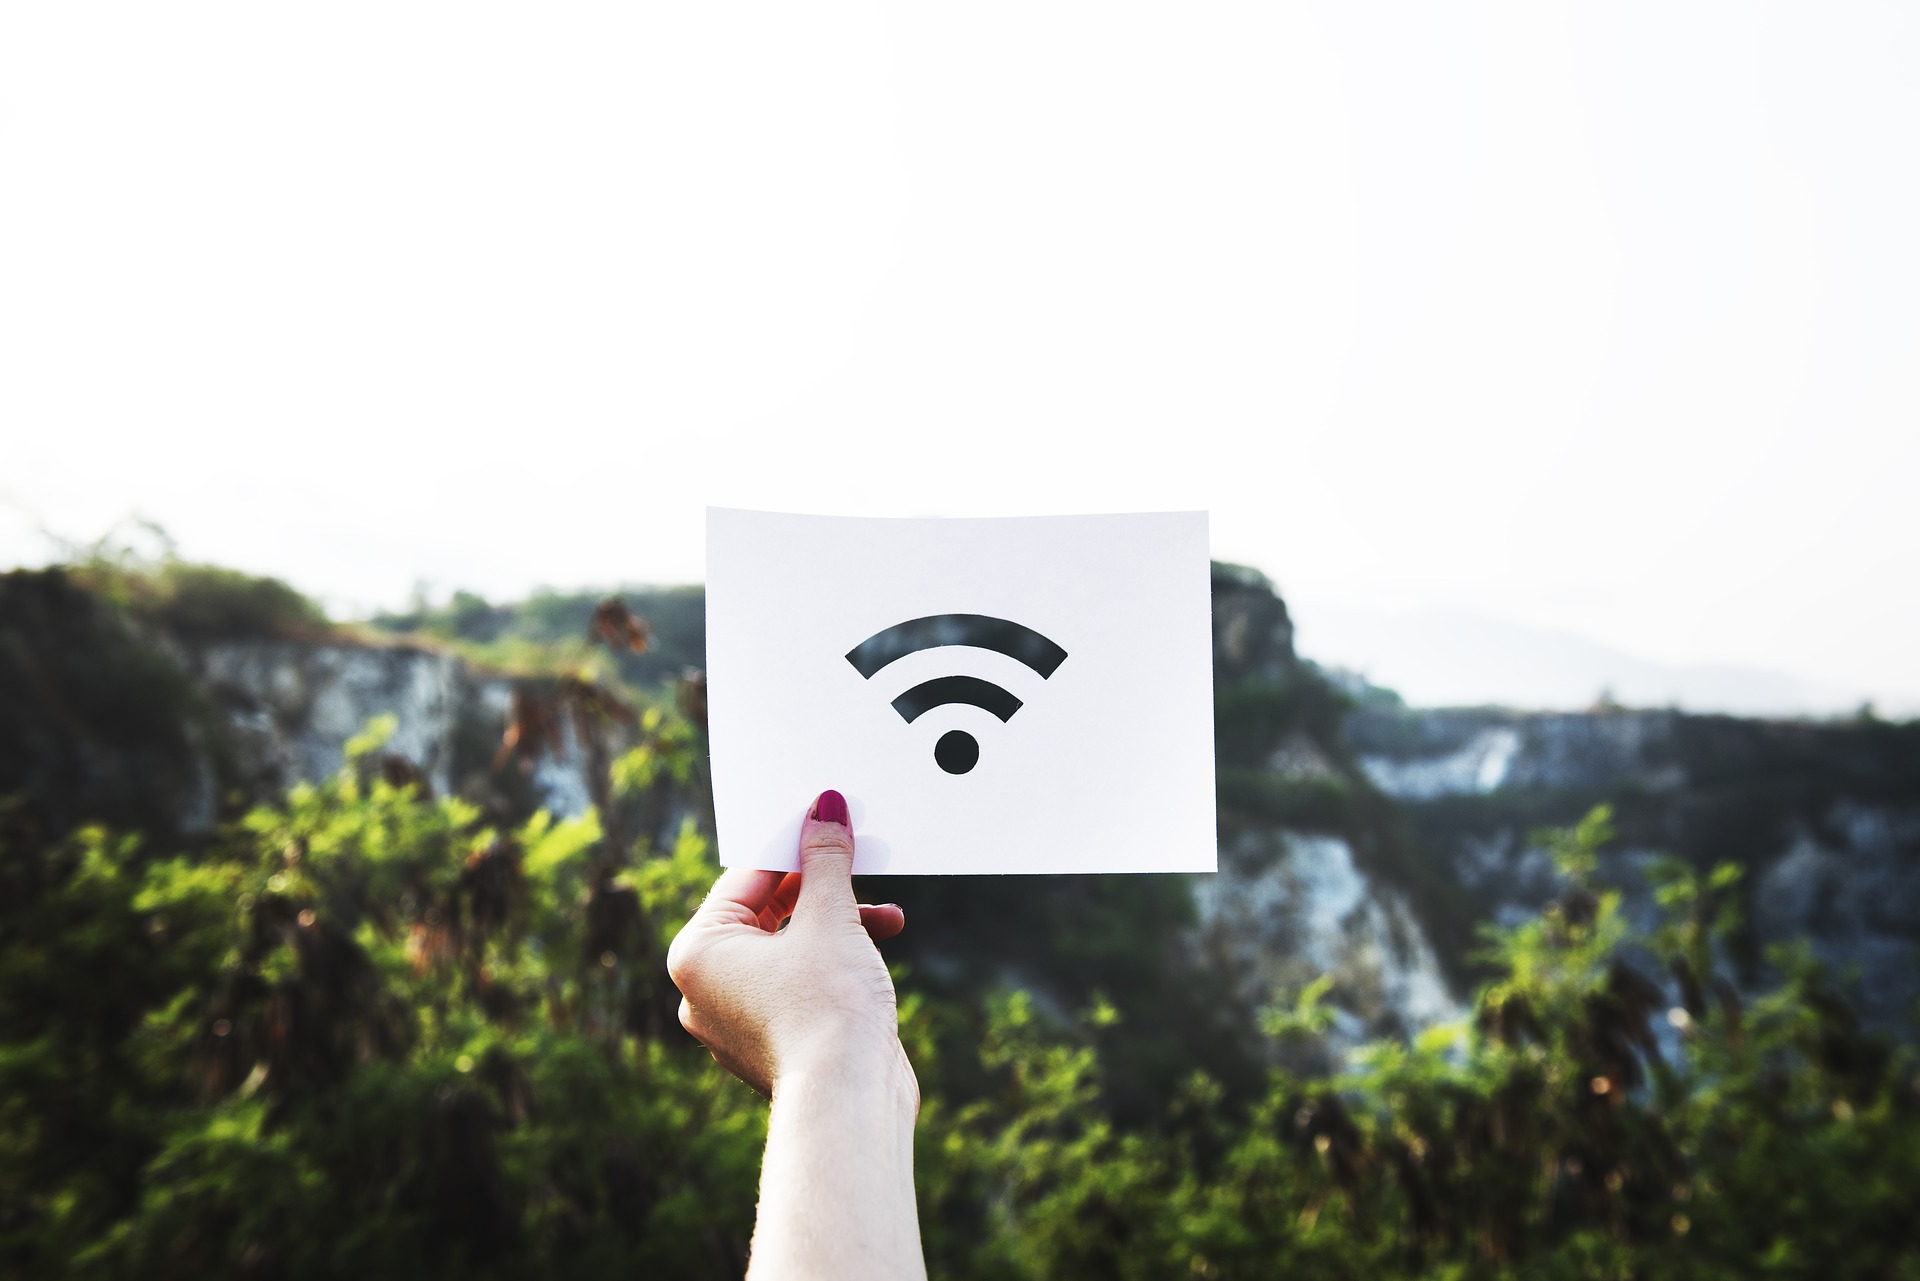 Para turista brasileiro, wi-fi é indispensável, diz Expedia